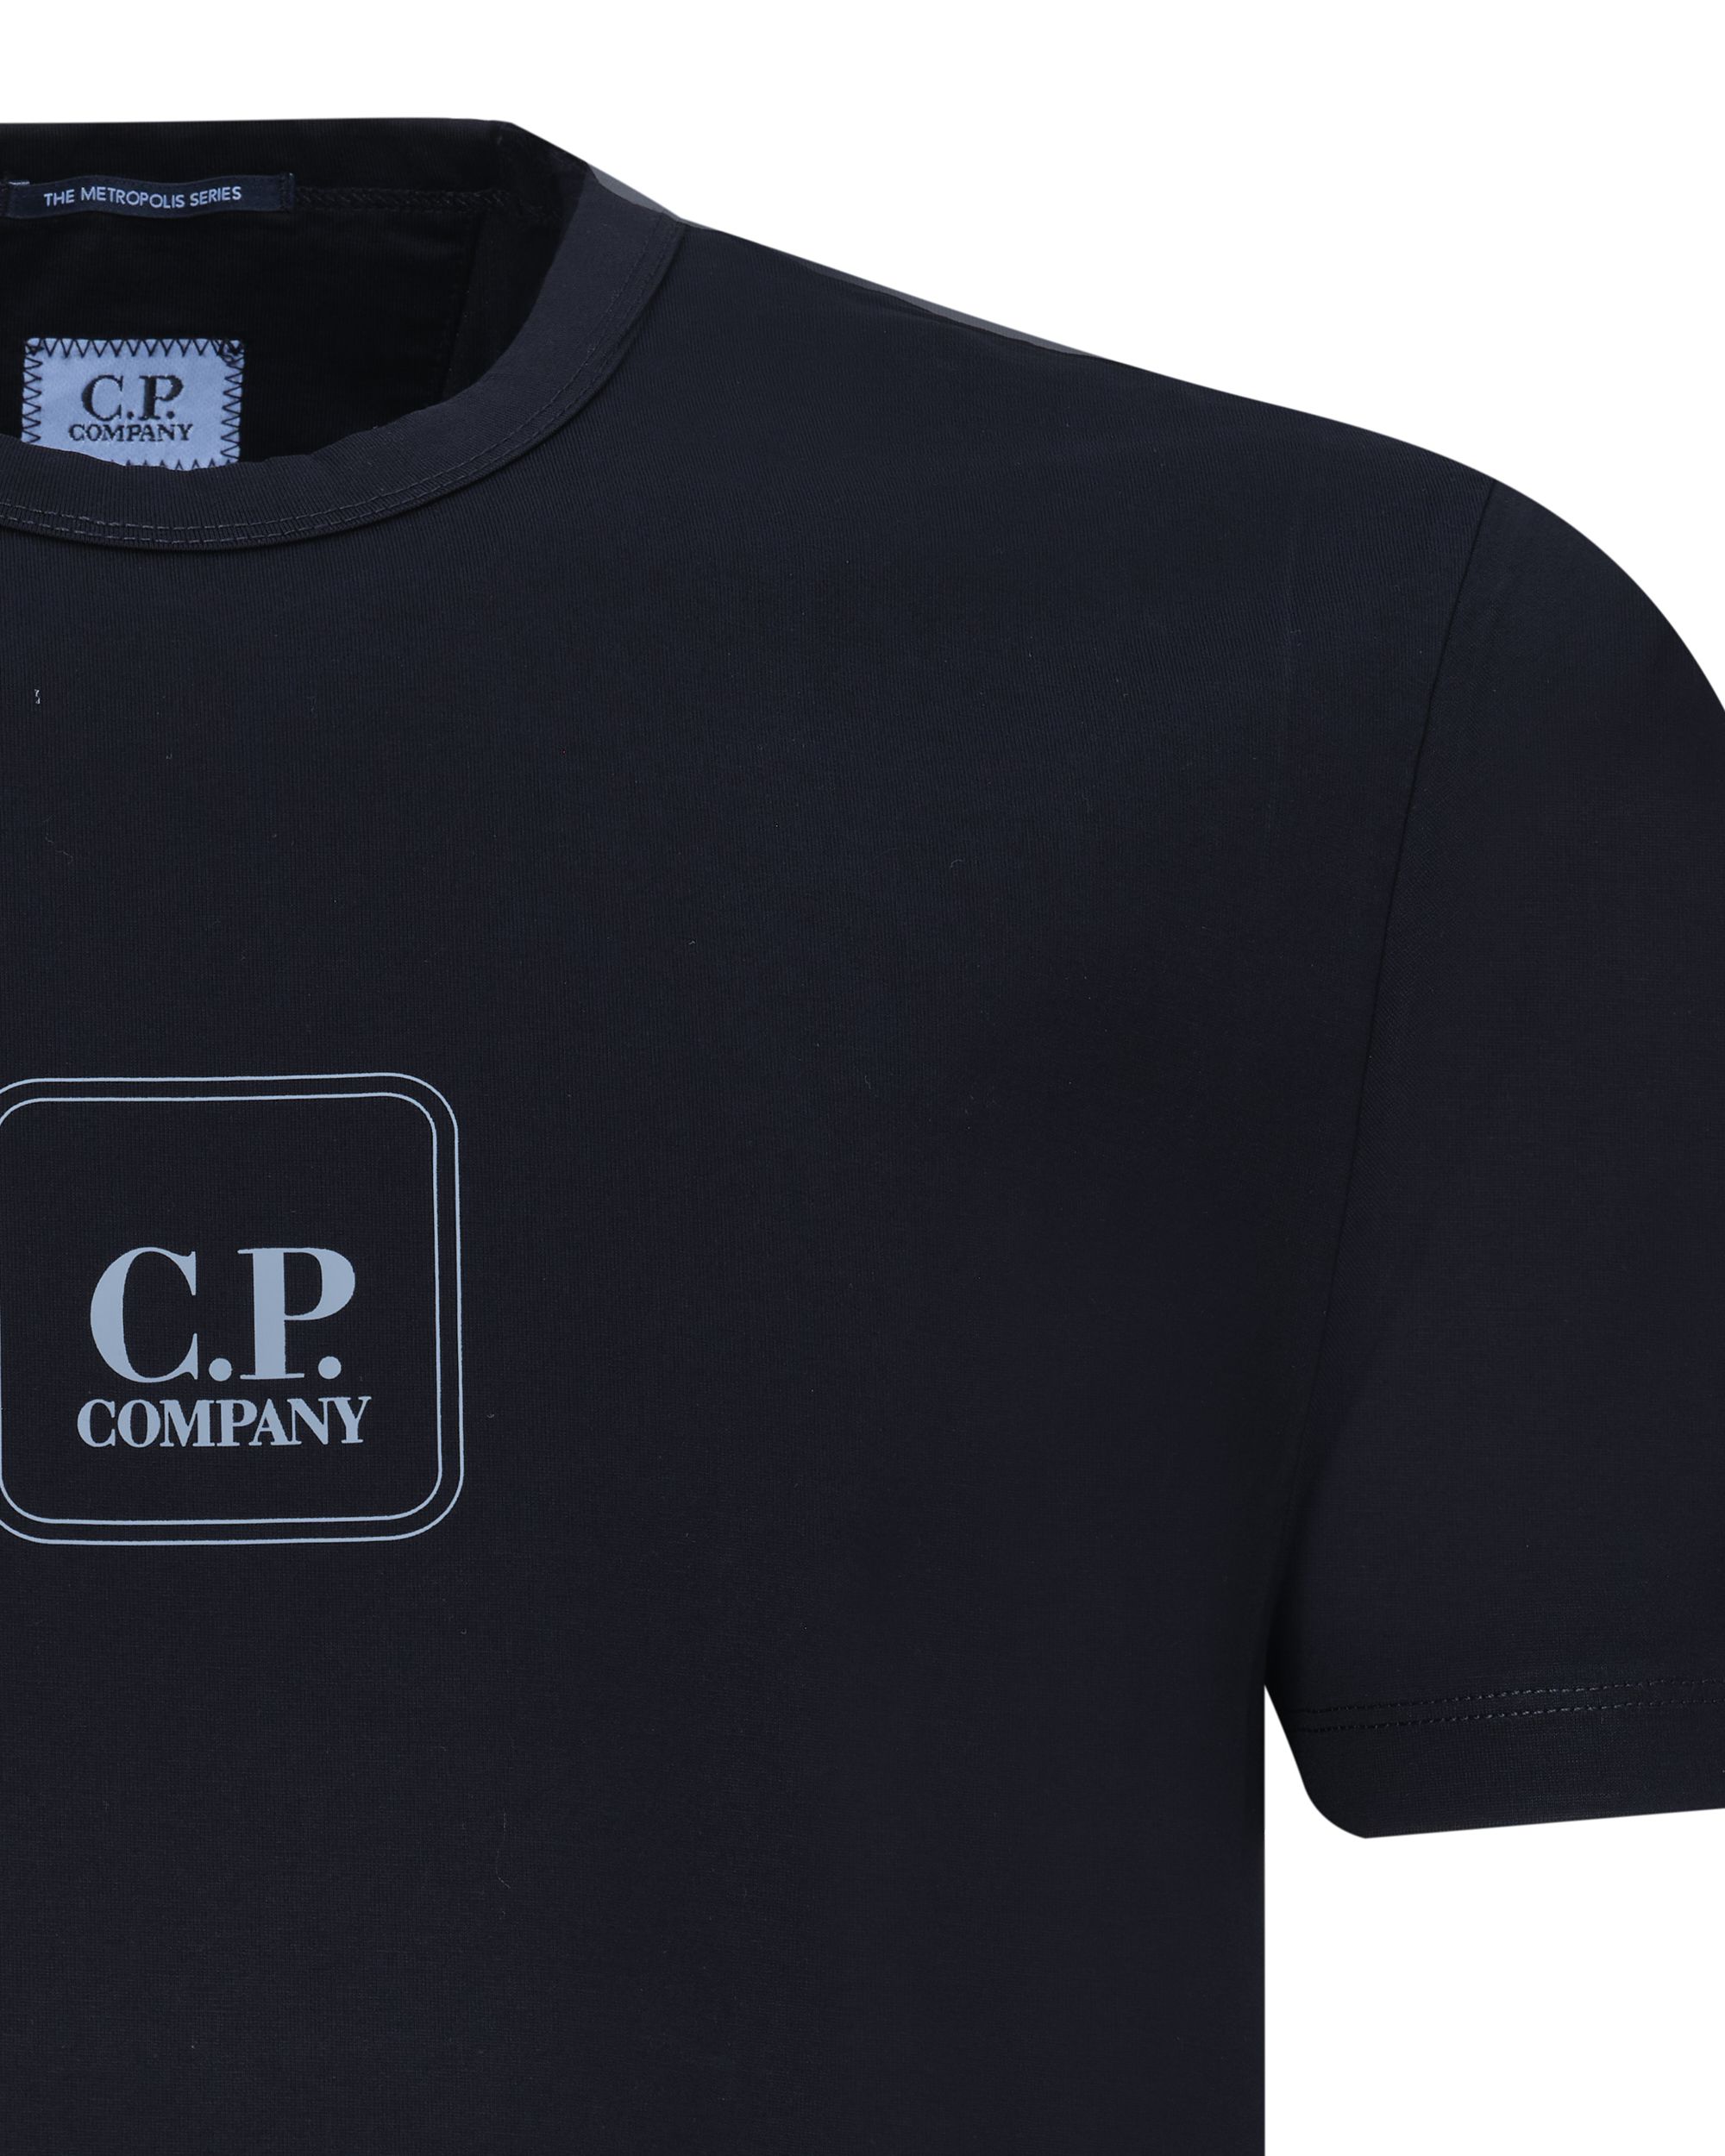 C.P Company T-shirt KM Zwart 078936-001-L